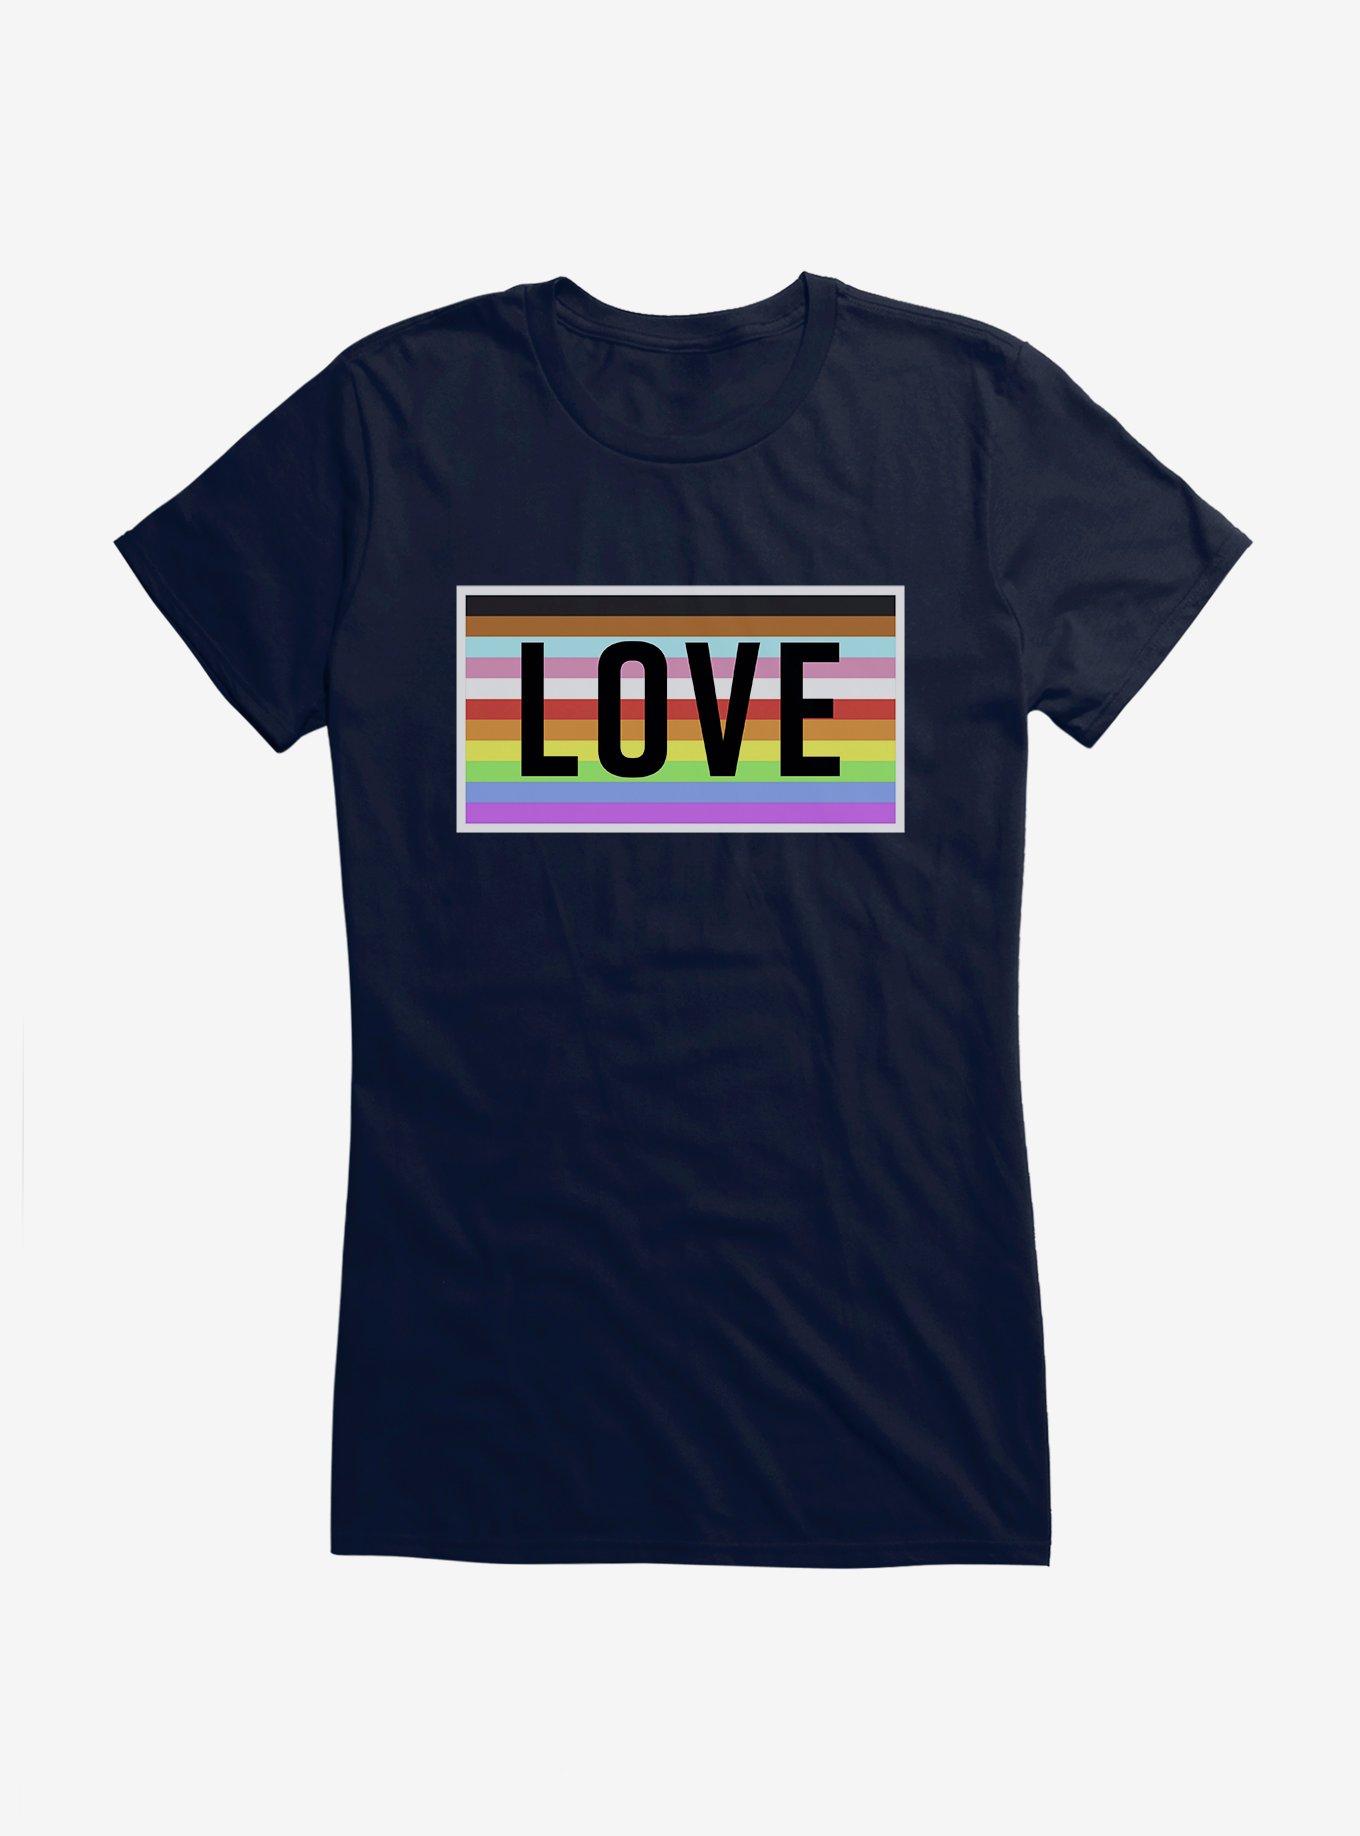 Hot Topic Foundation LOVE Girls T-Shirt, NAVY, hi-res